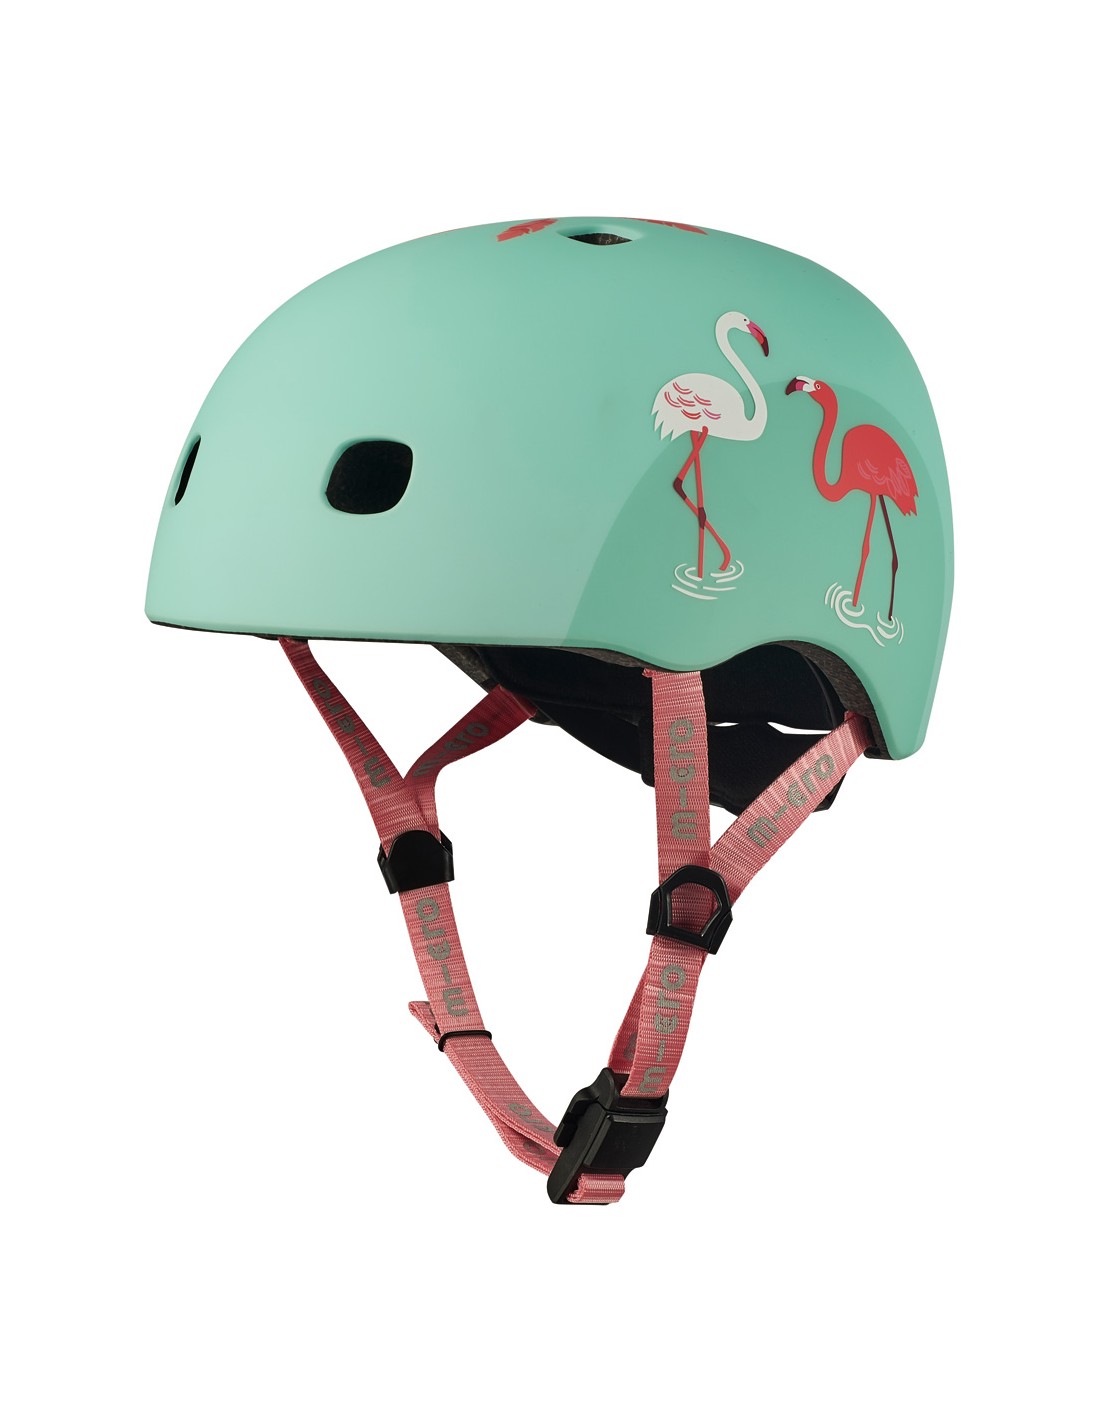 Micro Helm Flamingo Scooterhelmgröße - S, von Micro Scooter